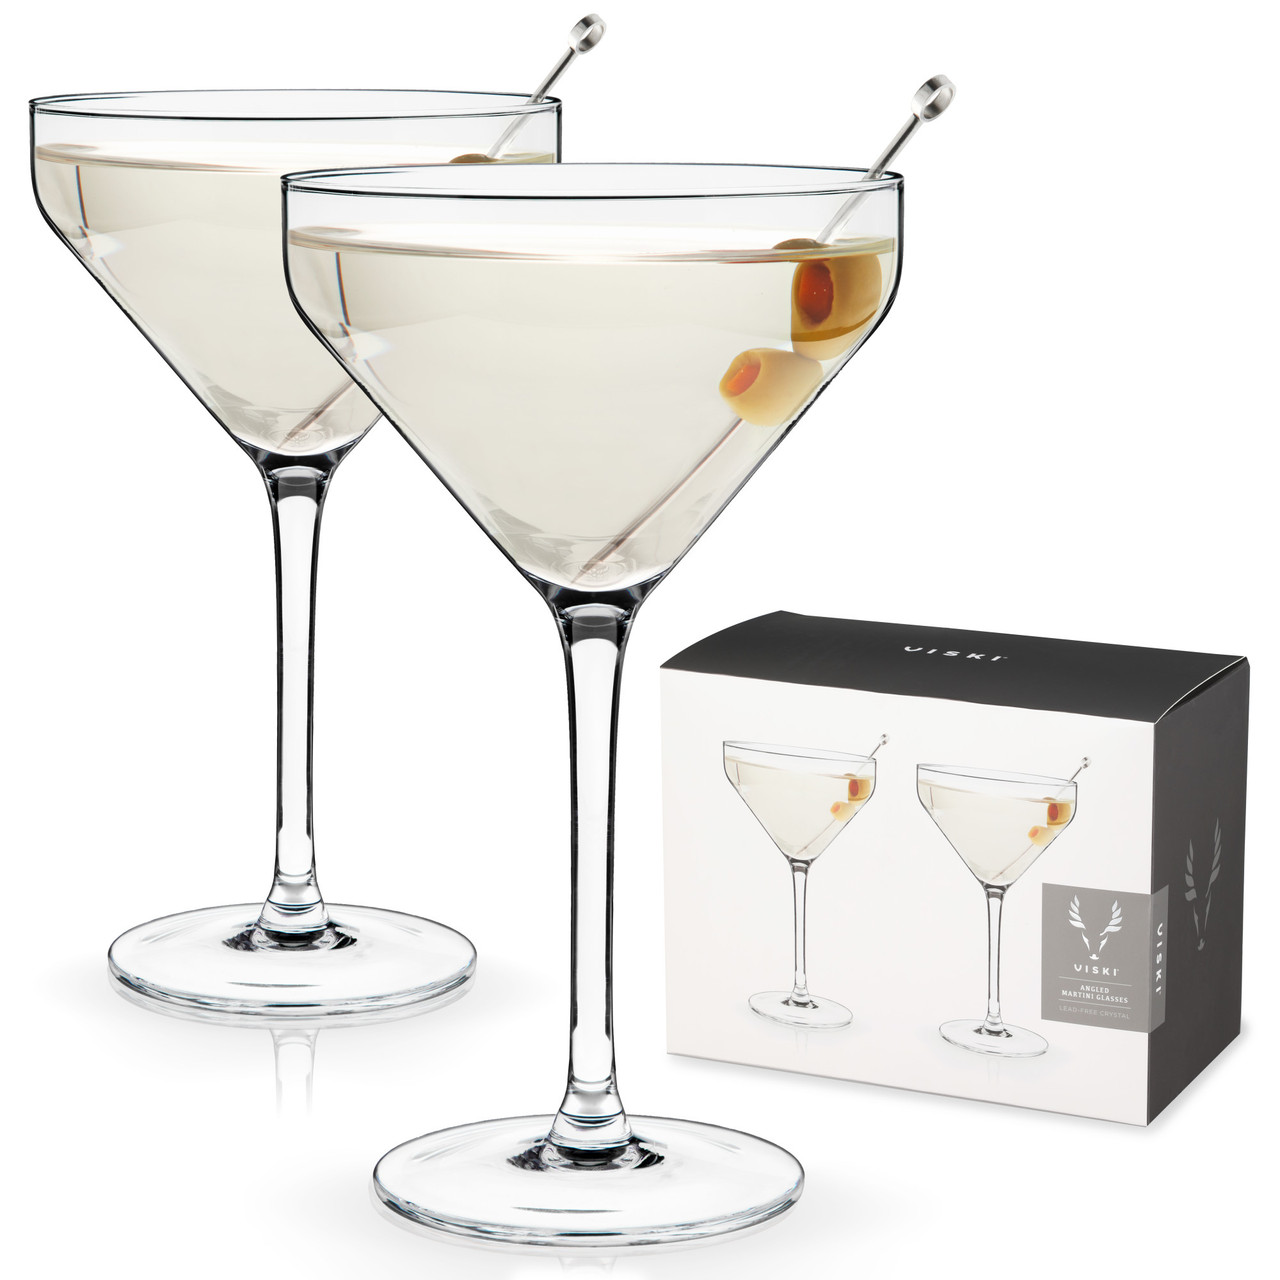 Angled Martini Glasses by Viski